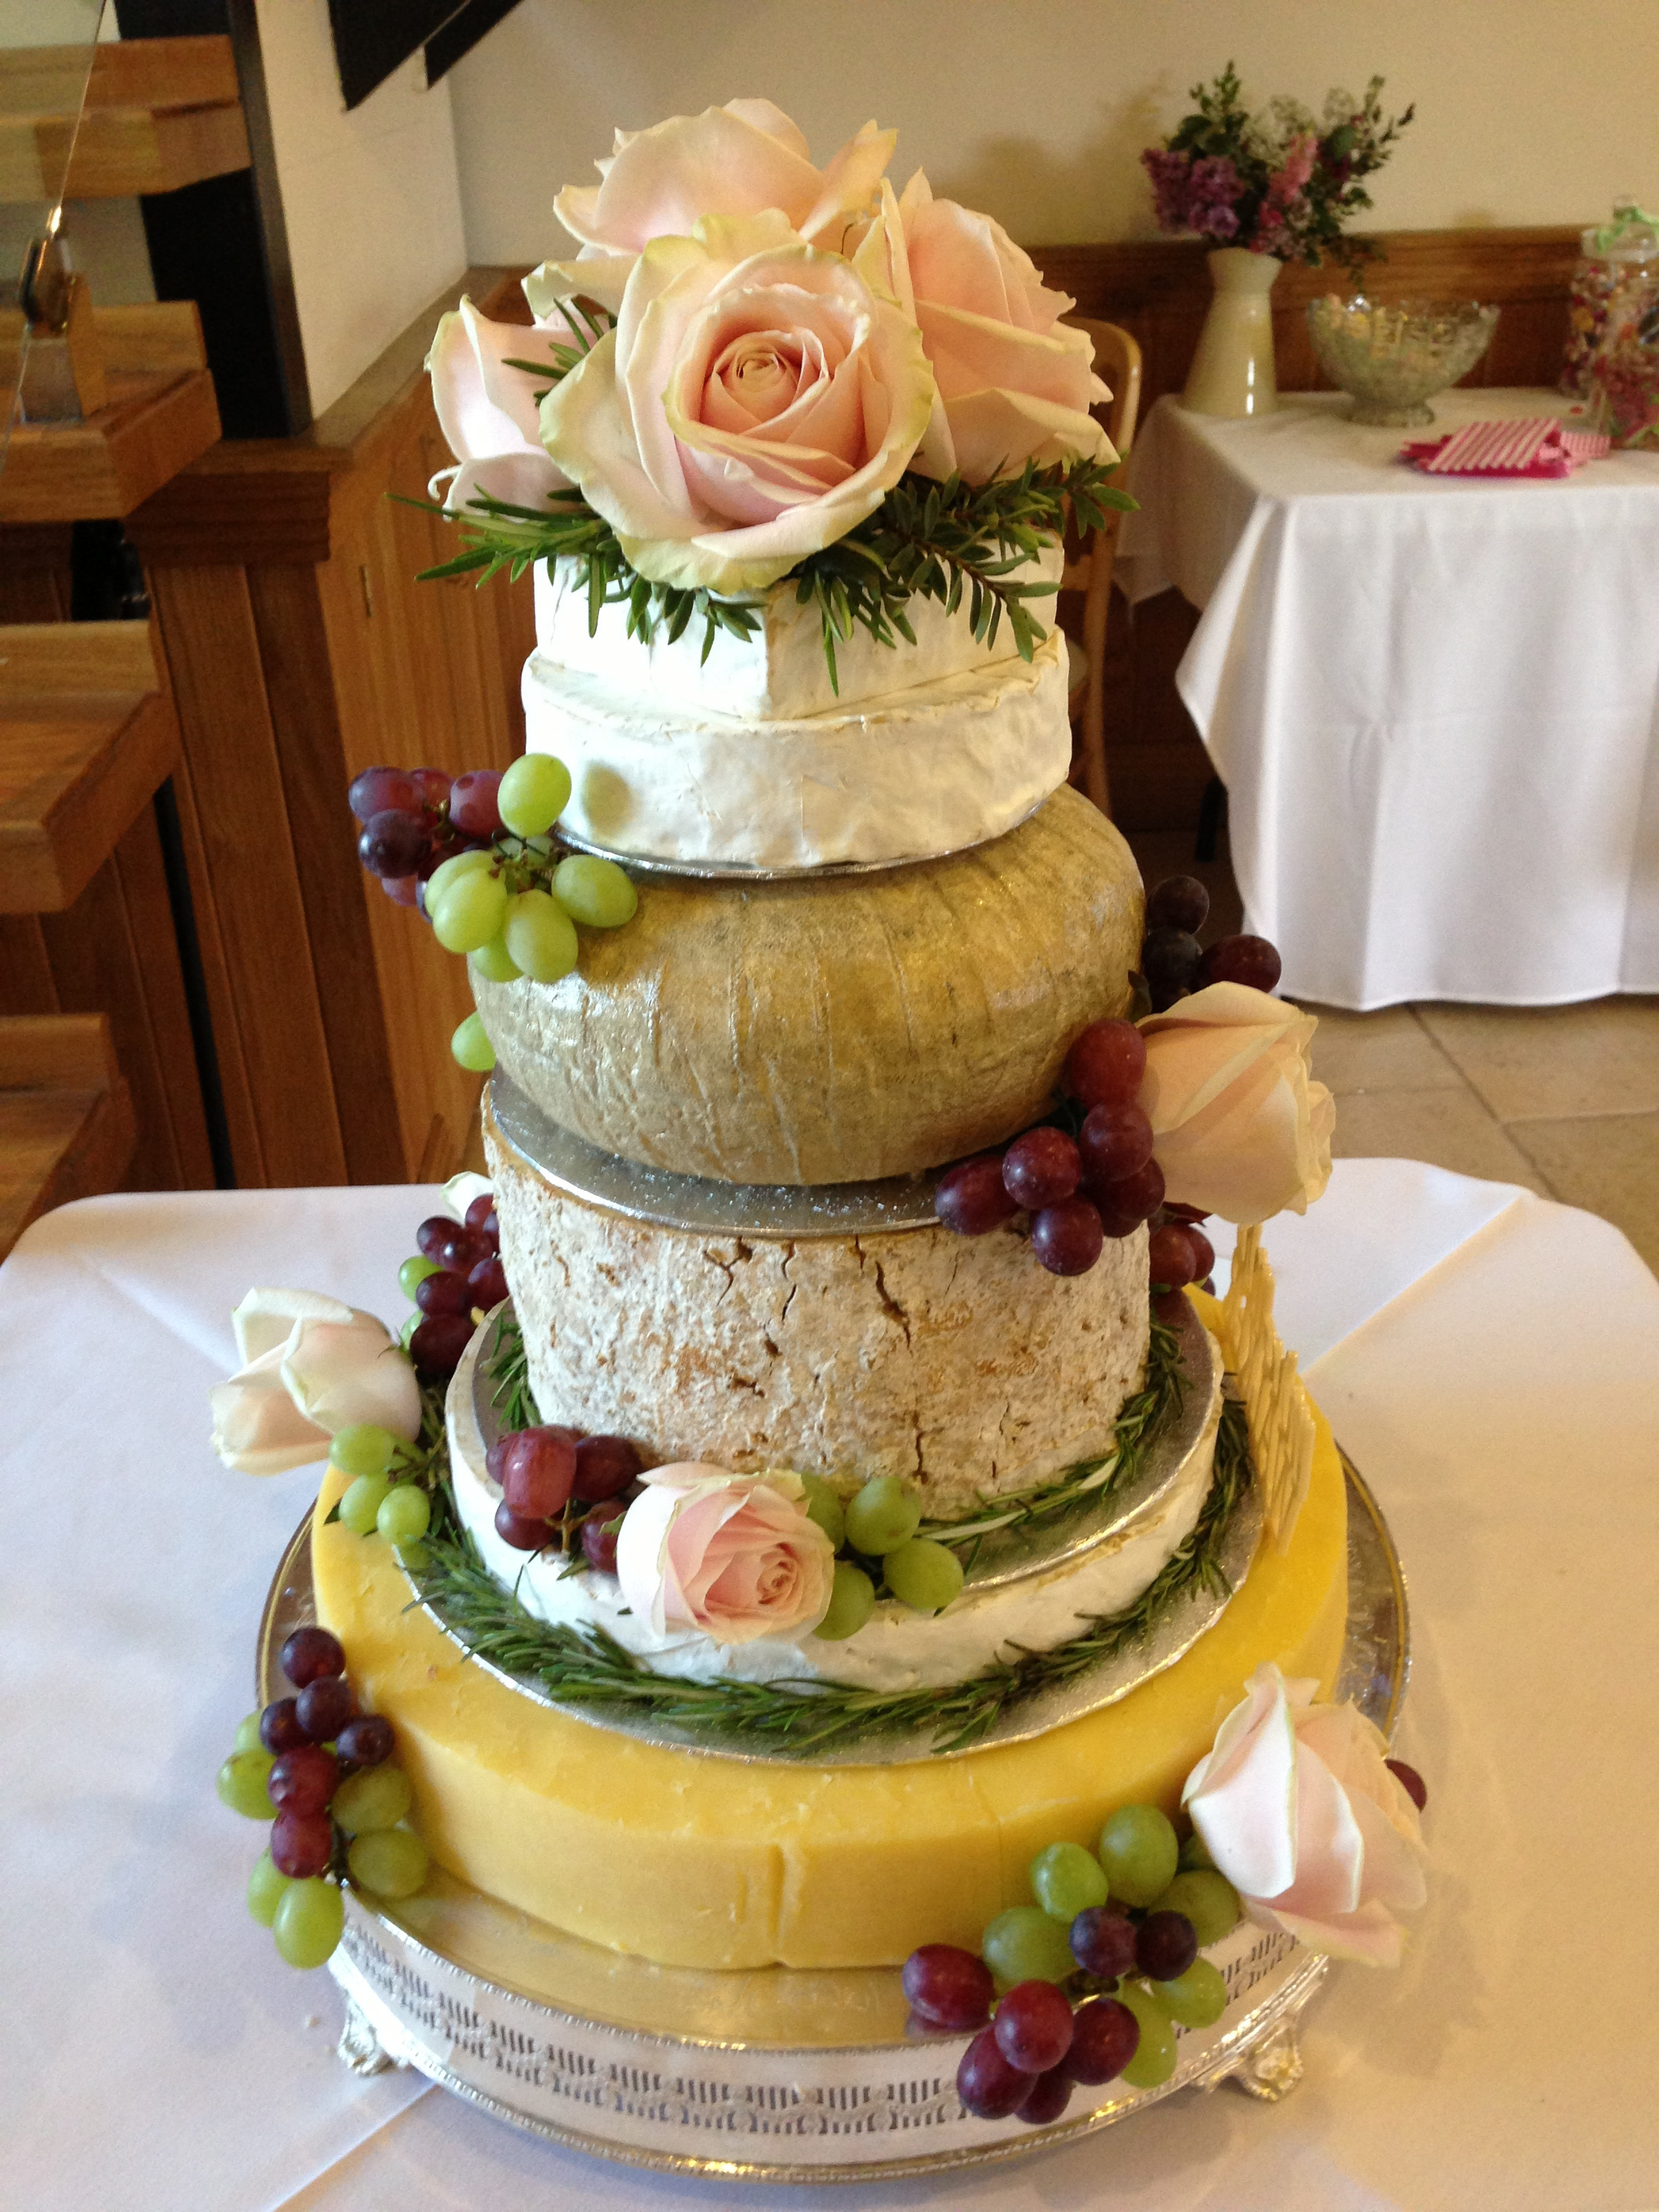 Buy Wedding Cakes
 Made to order organic cheese wedding cakes